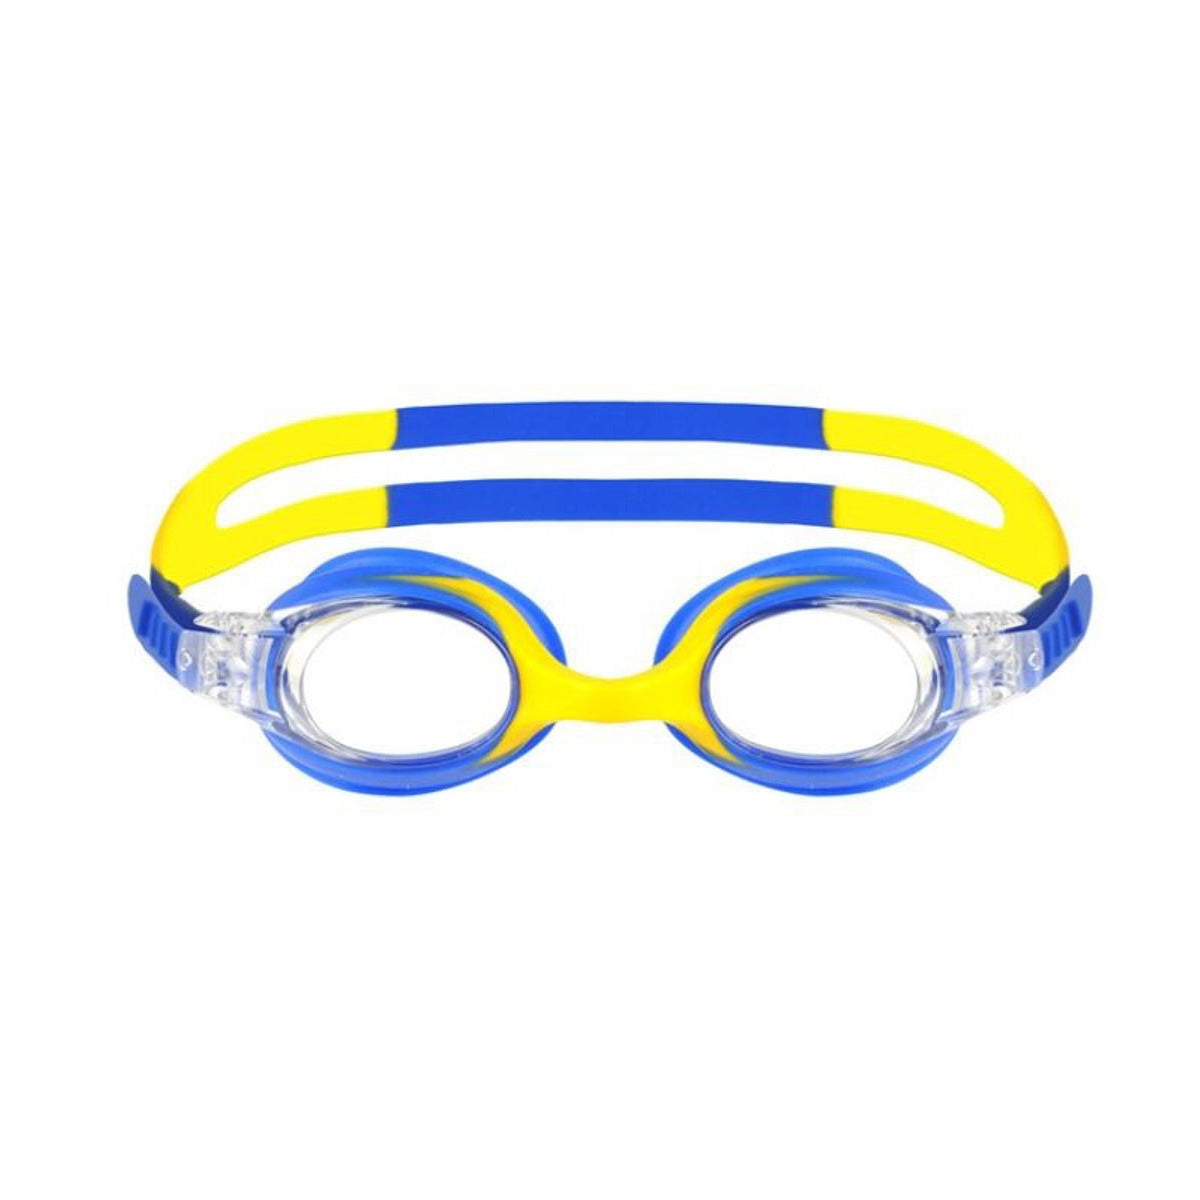 Malmsten "Guppy" Svømmebriller til børn | Kongeblå